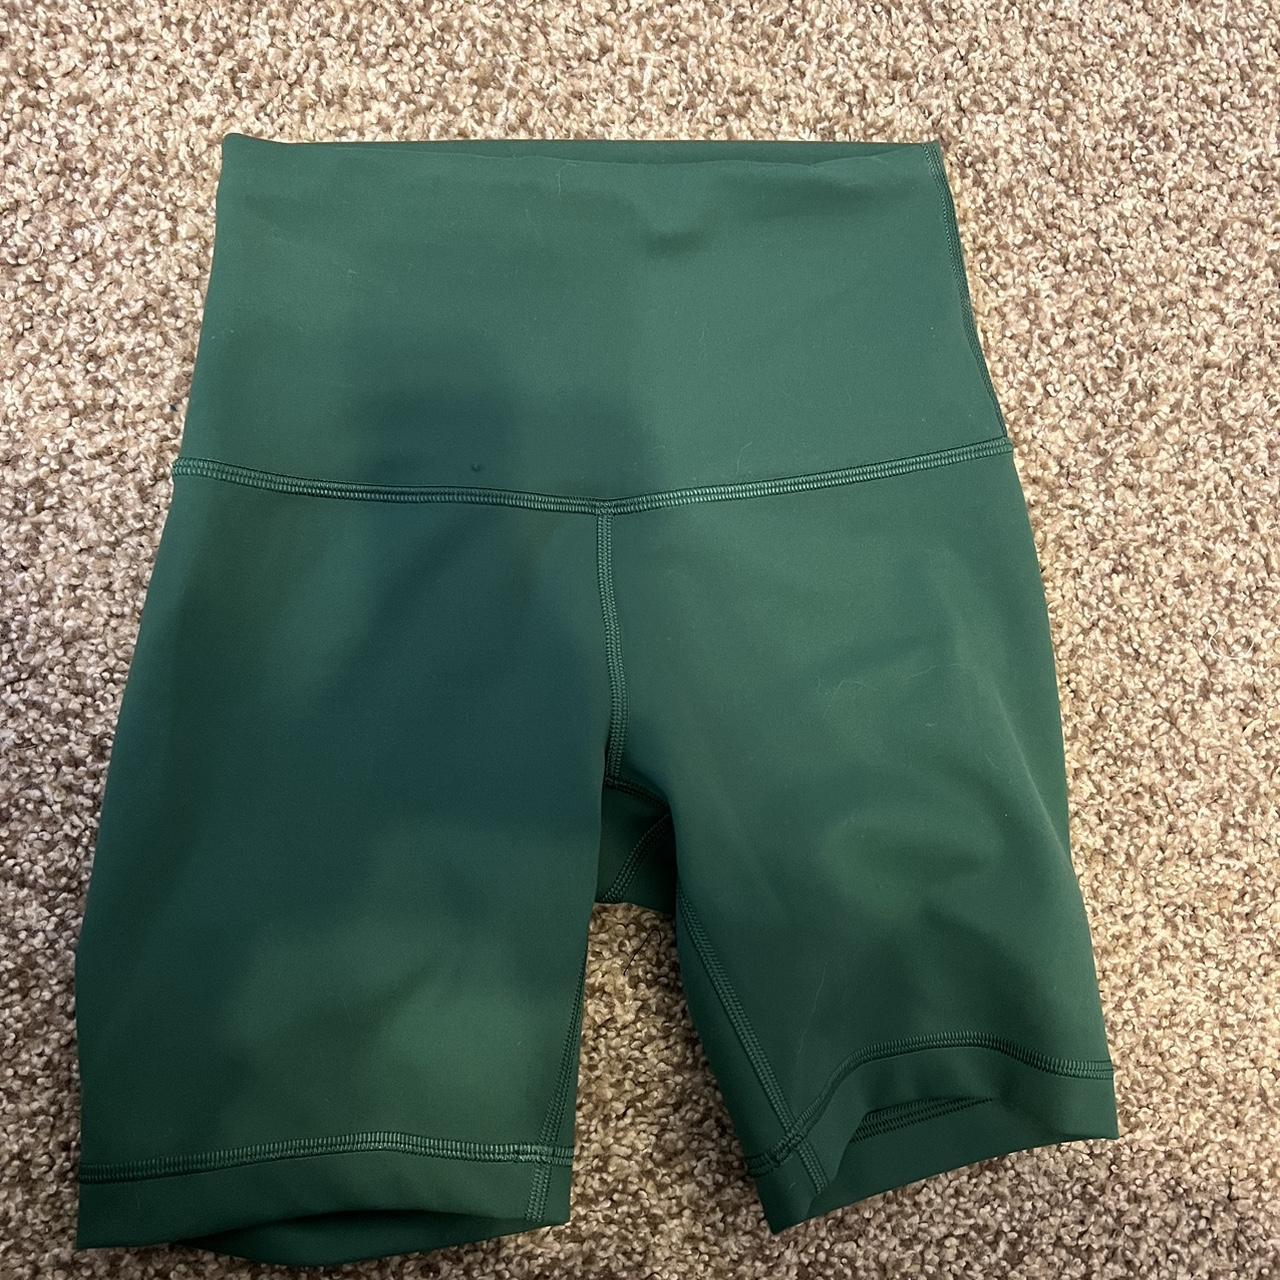 Green biker shorts from Lovers and Friendw from - Depop